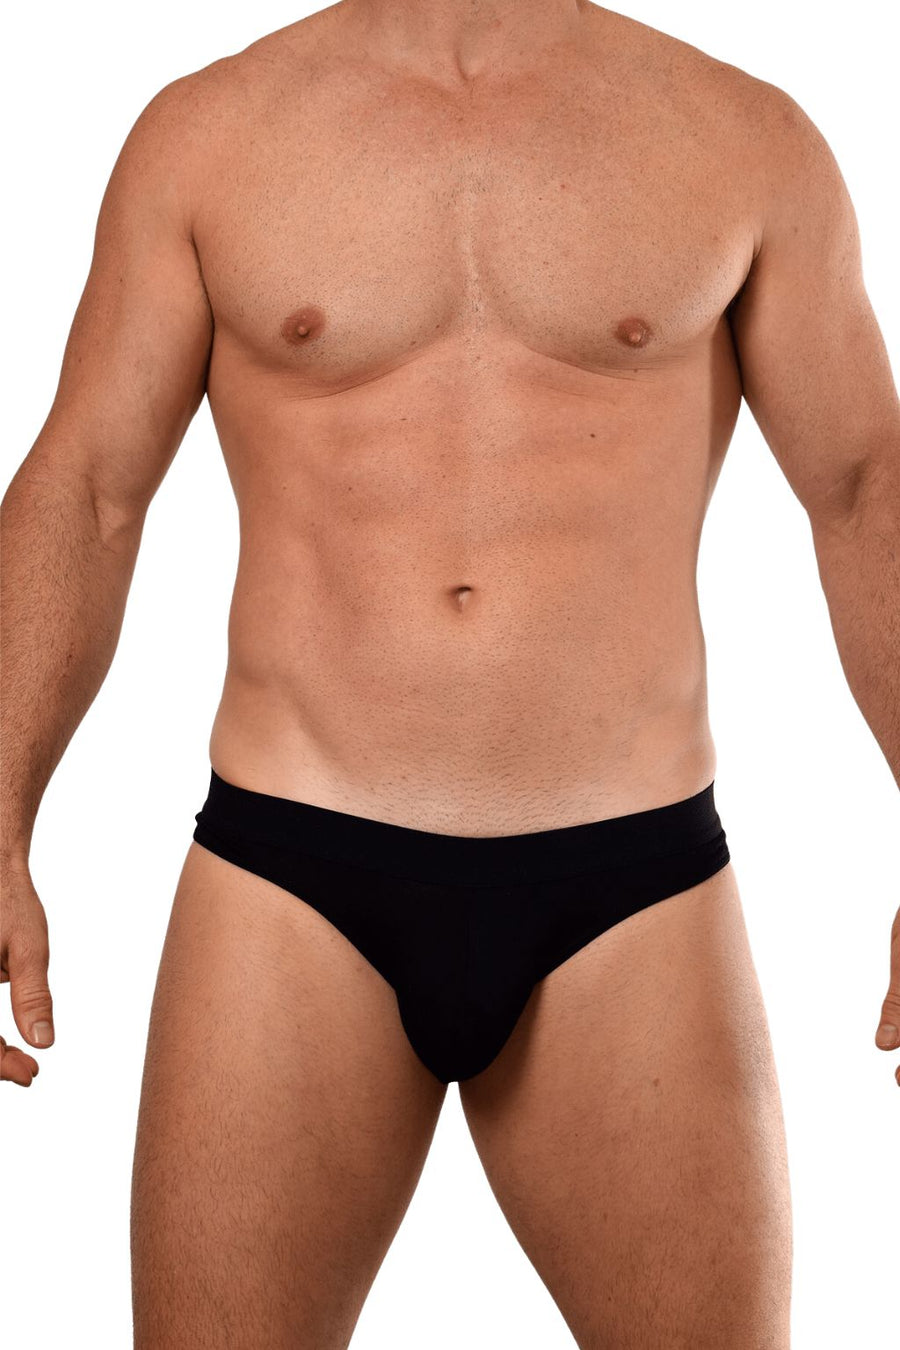 BfM Mens Wide Band Cotton Bikini Underwear – Bodywear for Men